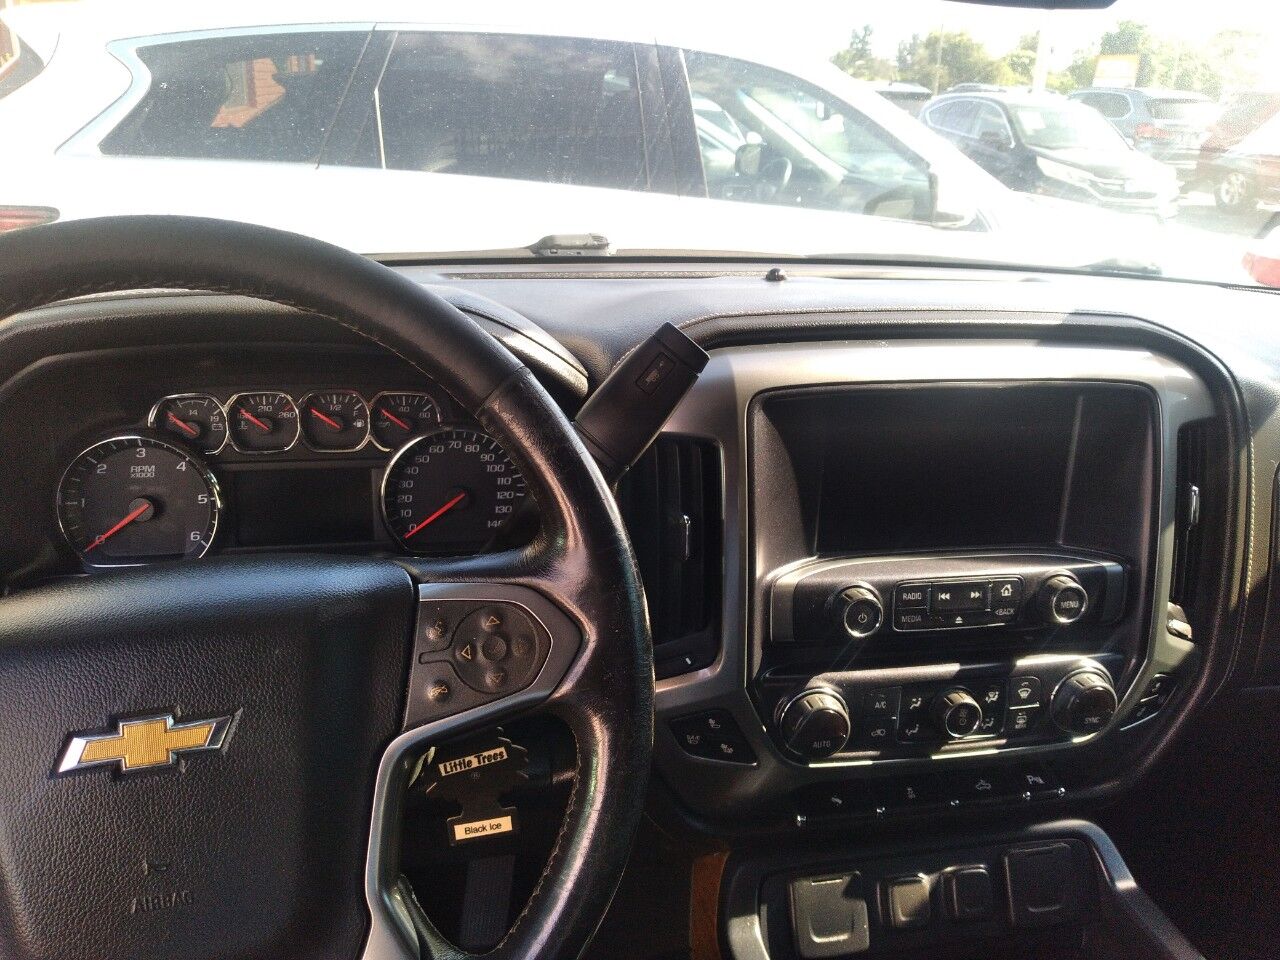 2014 Chevrolet Silverado Pickup - $19,999